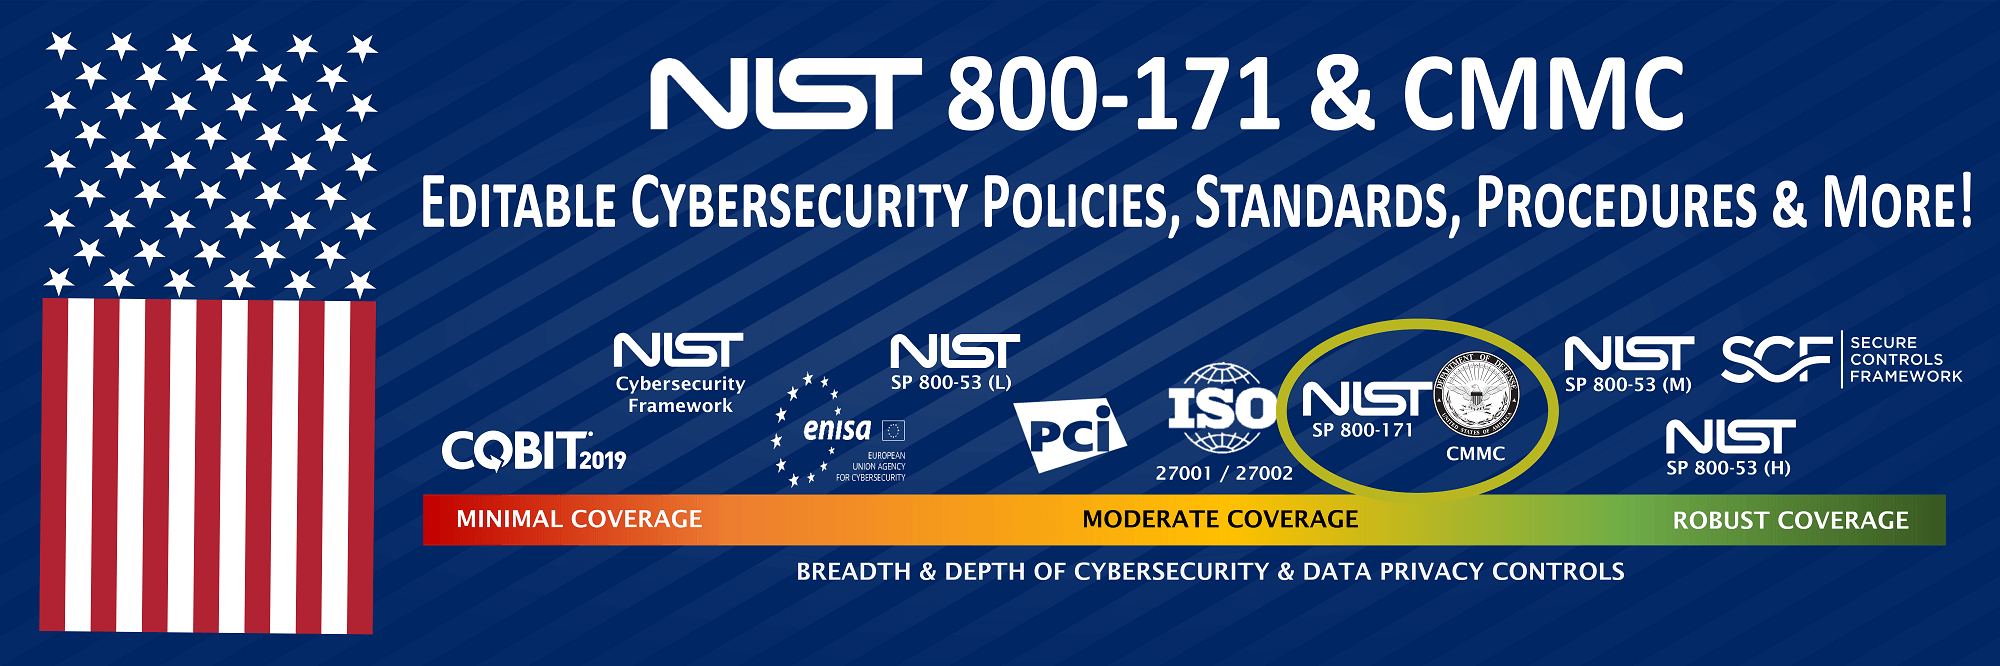 NIST 800-171 & CMMC editable cybersecurity policies standards procedure scrm documentation templates